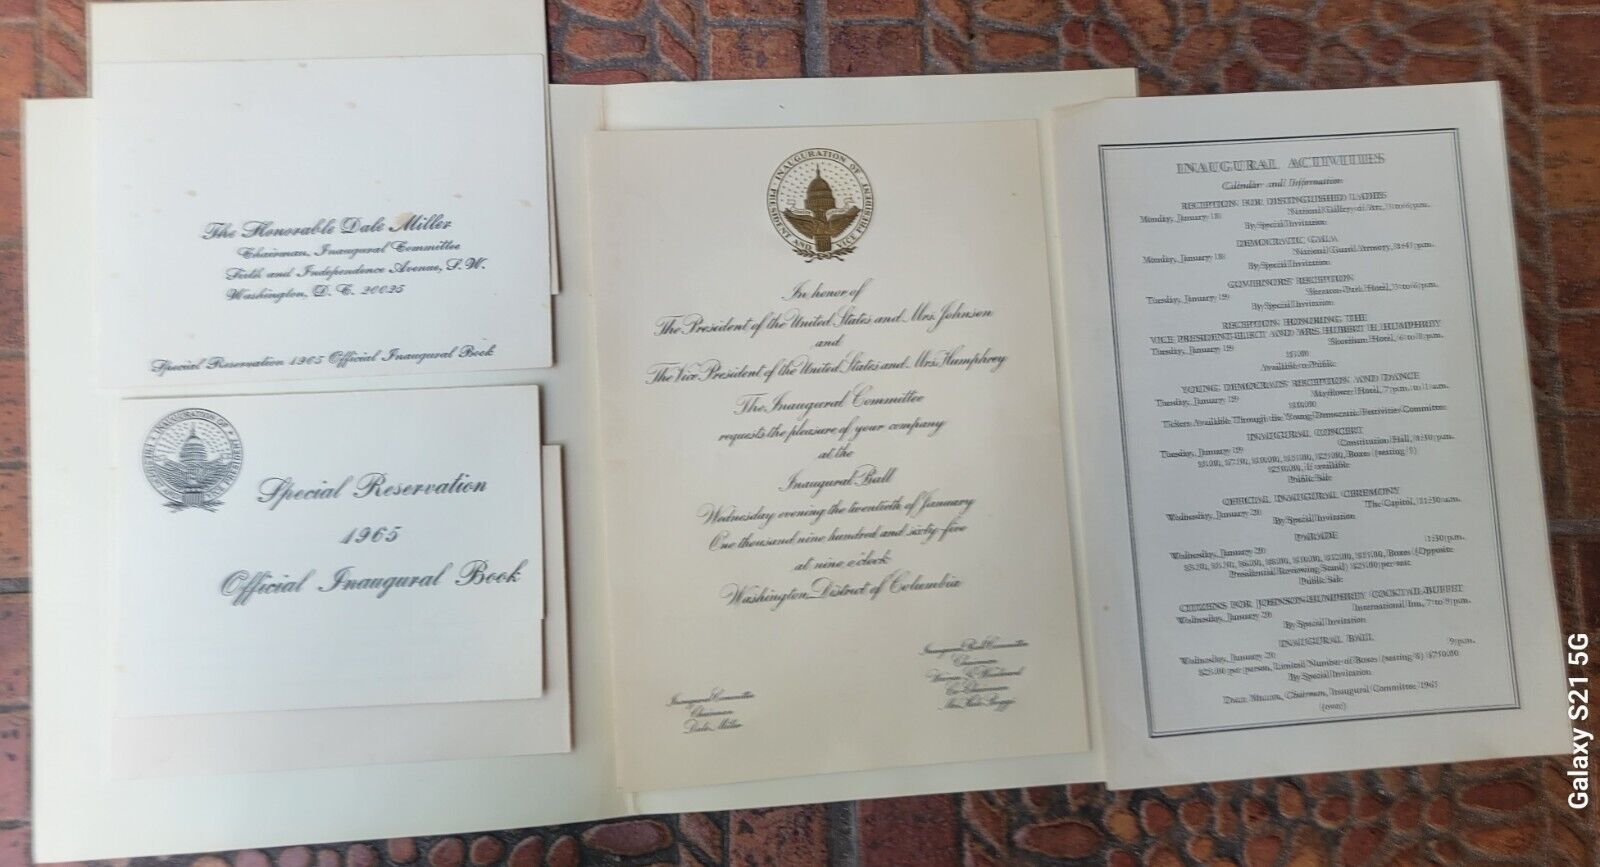 1965 Official Lyndon Johnson Inaugural Congressional Invitation and Program